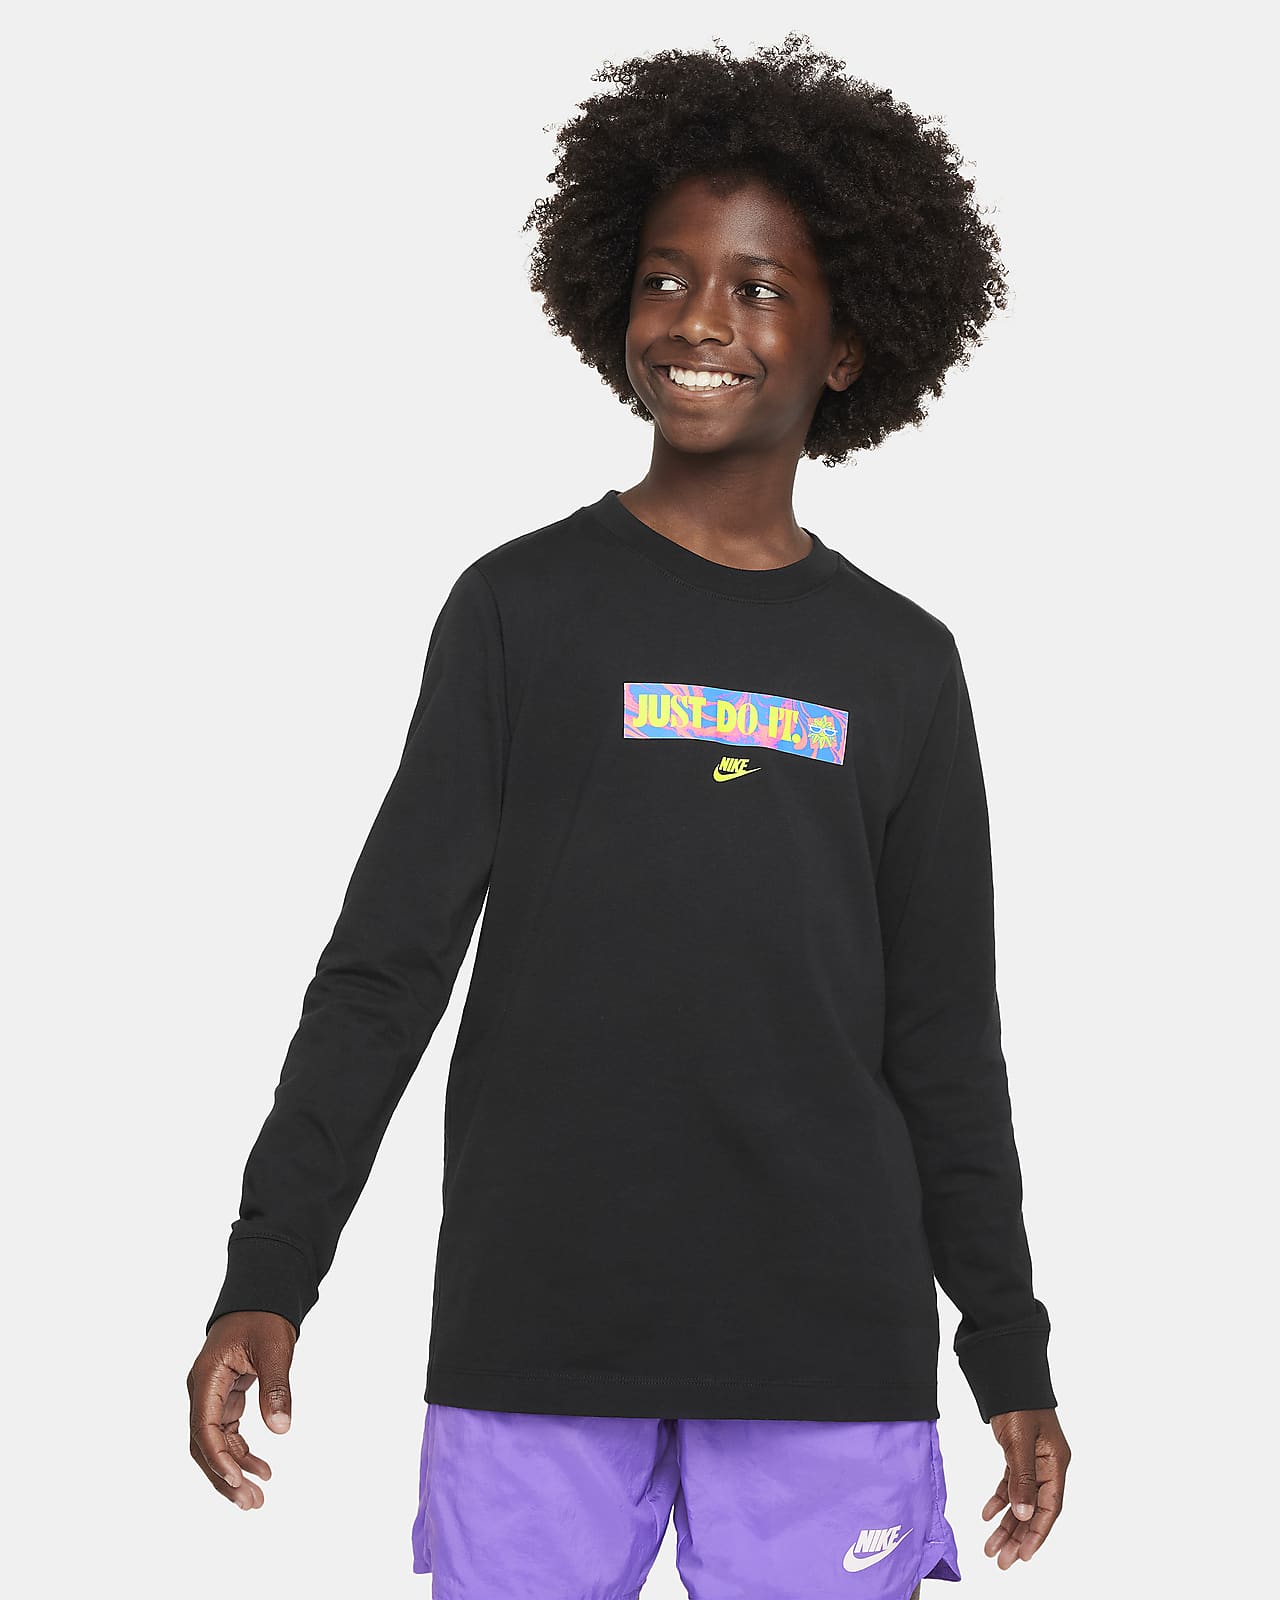 Kids\' T-Shirt. Long-Sleeve Big Nike Sportswear